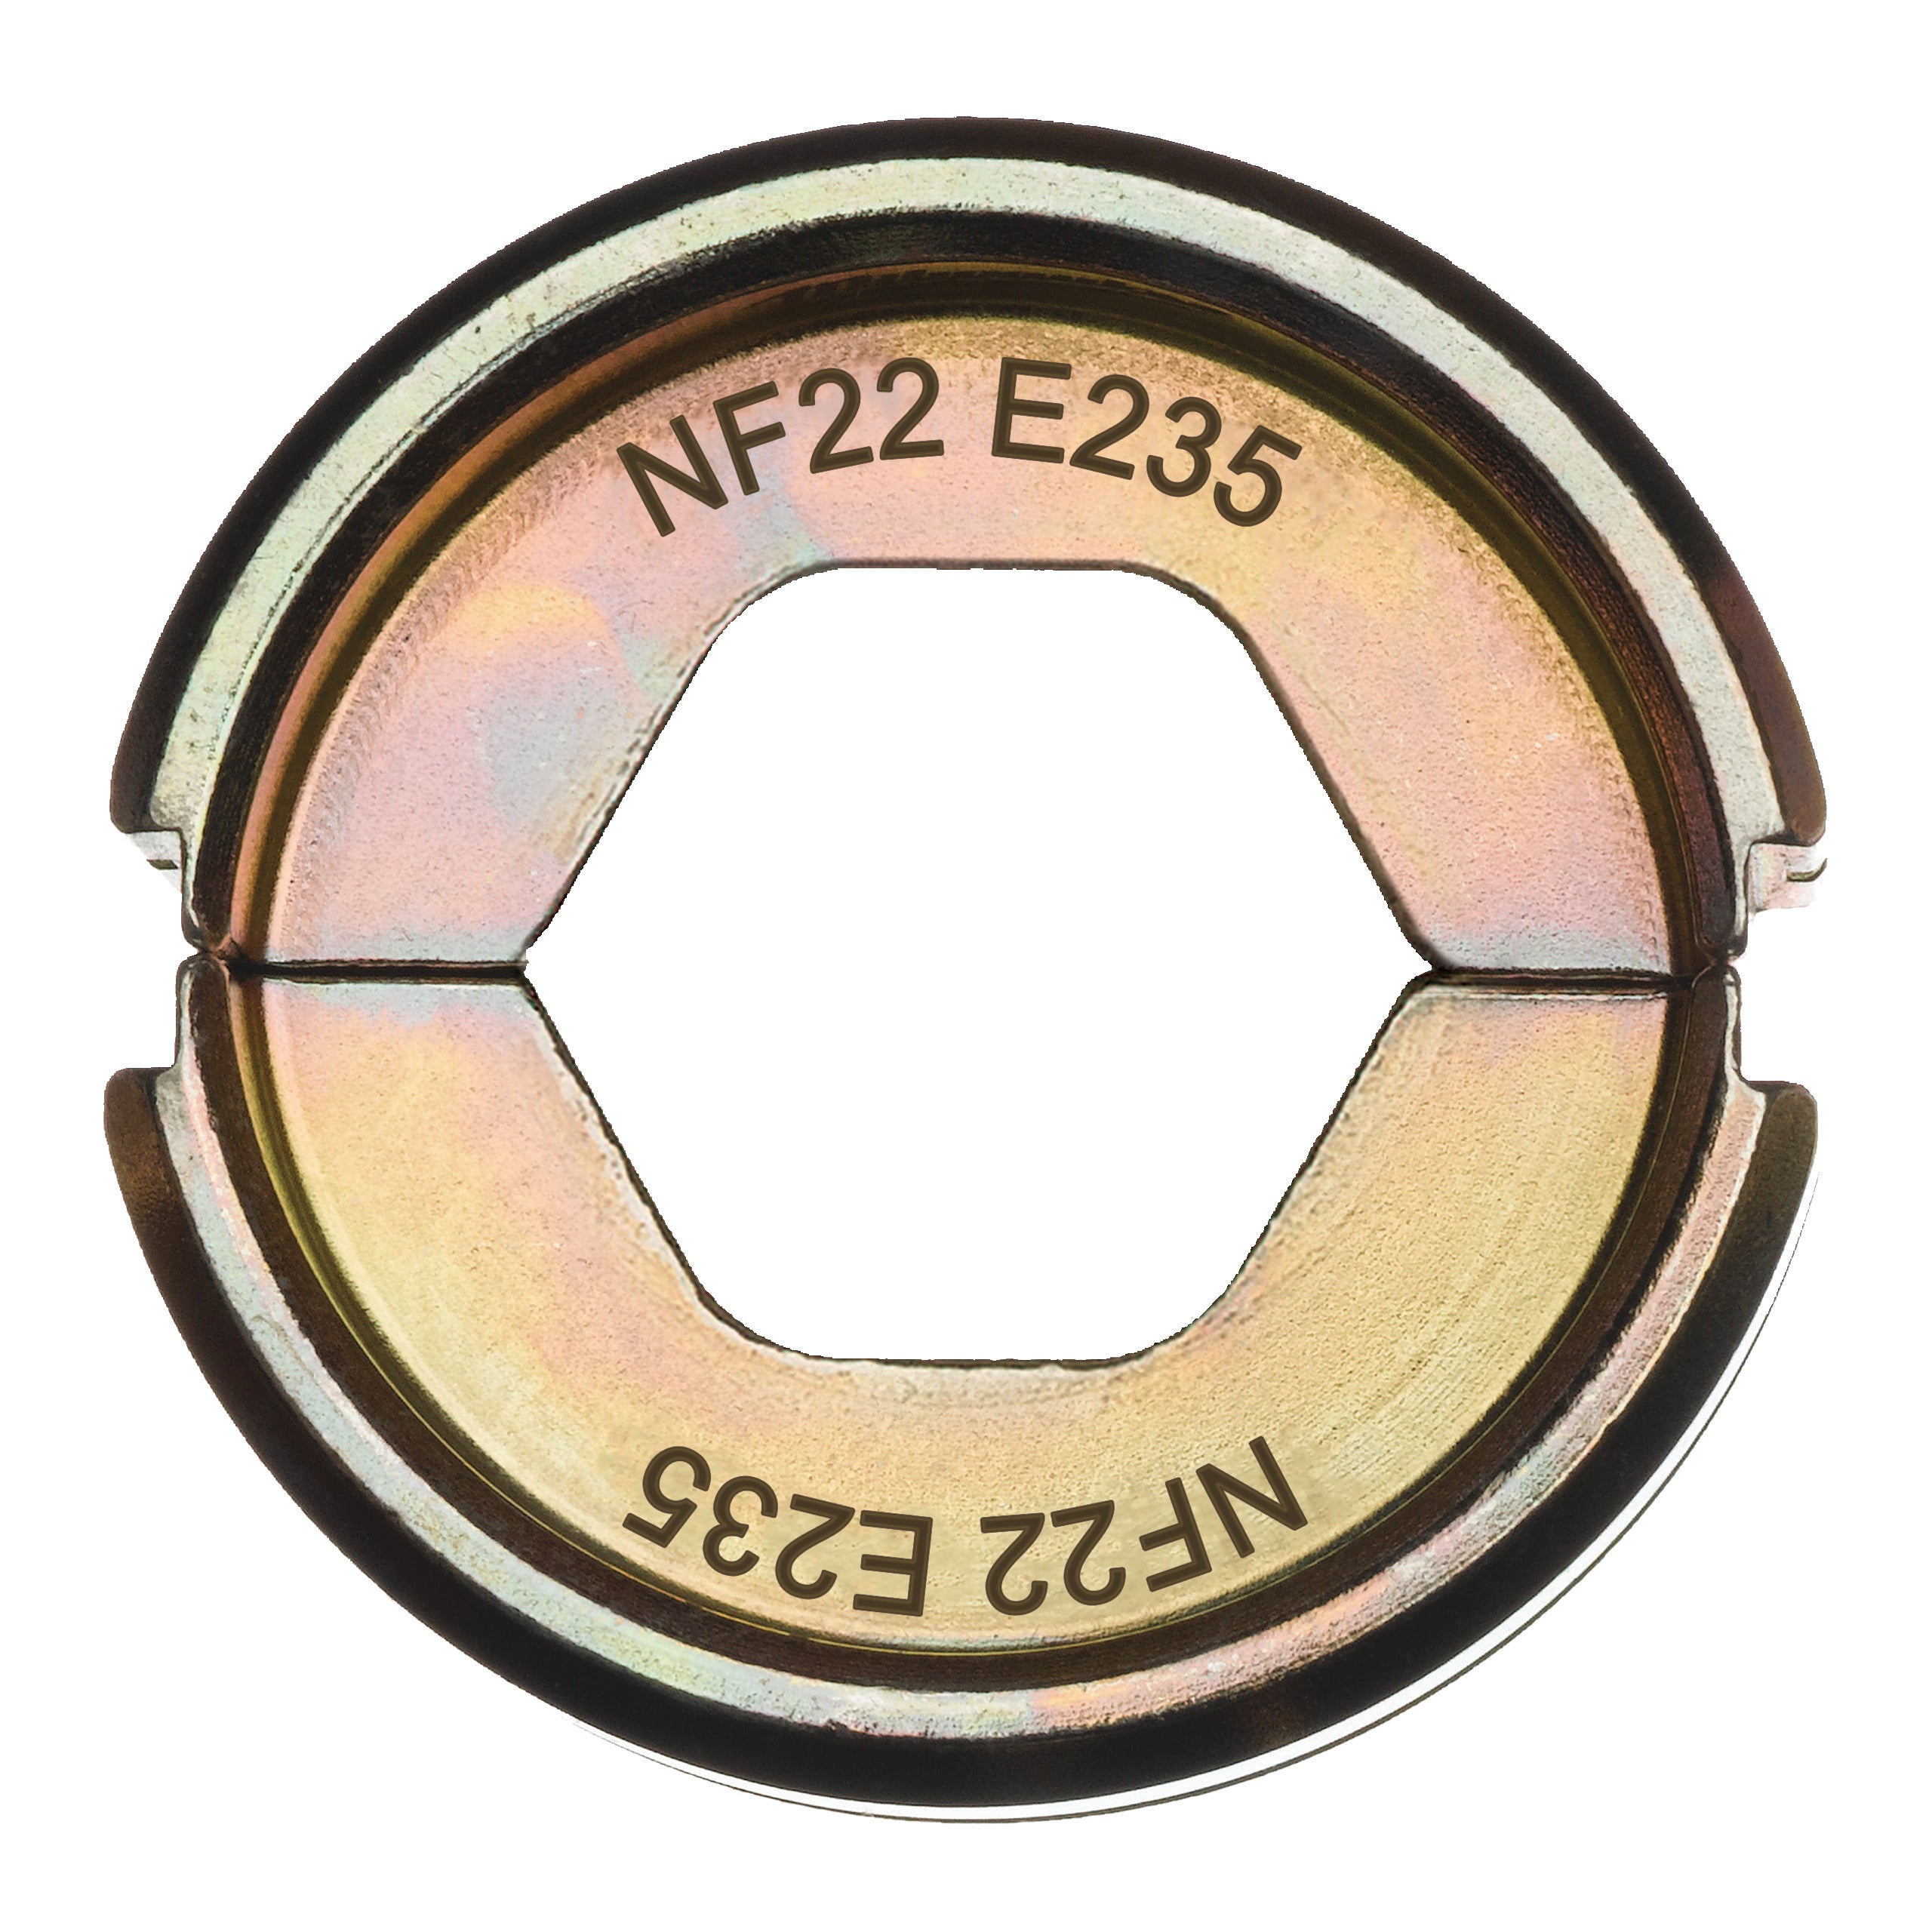 MATRICE POUR SERTISSEUSE FORCE LOGIC (ELECTRICITE) NF22 E235